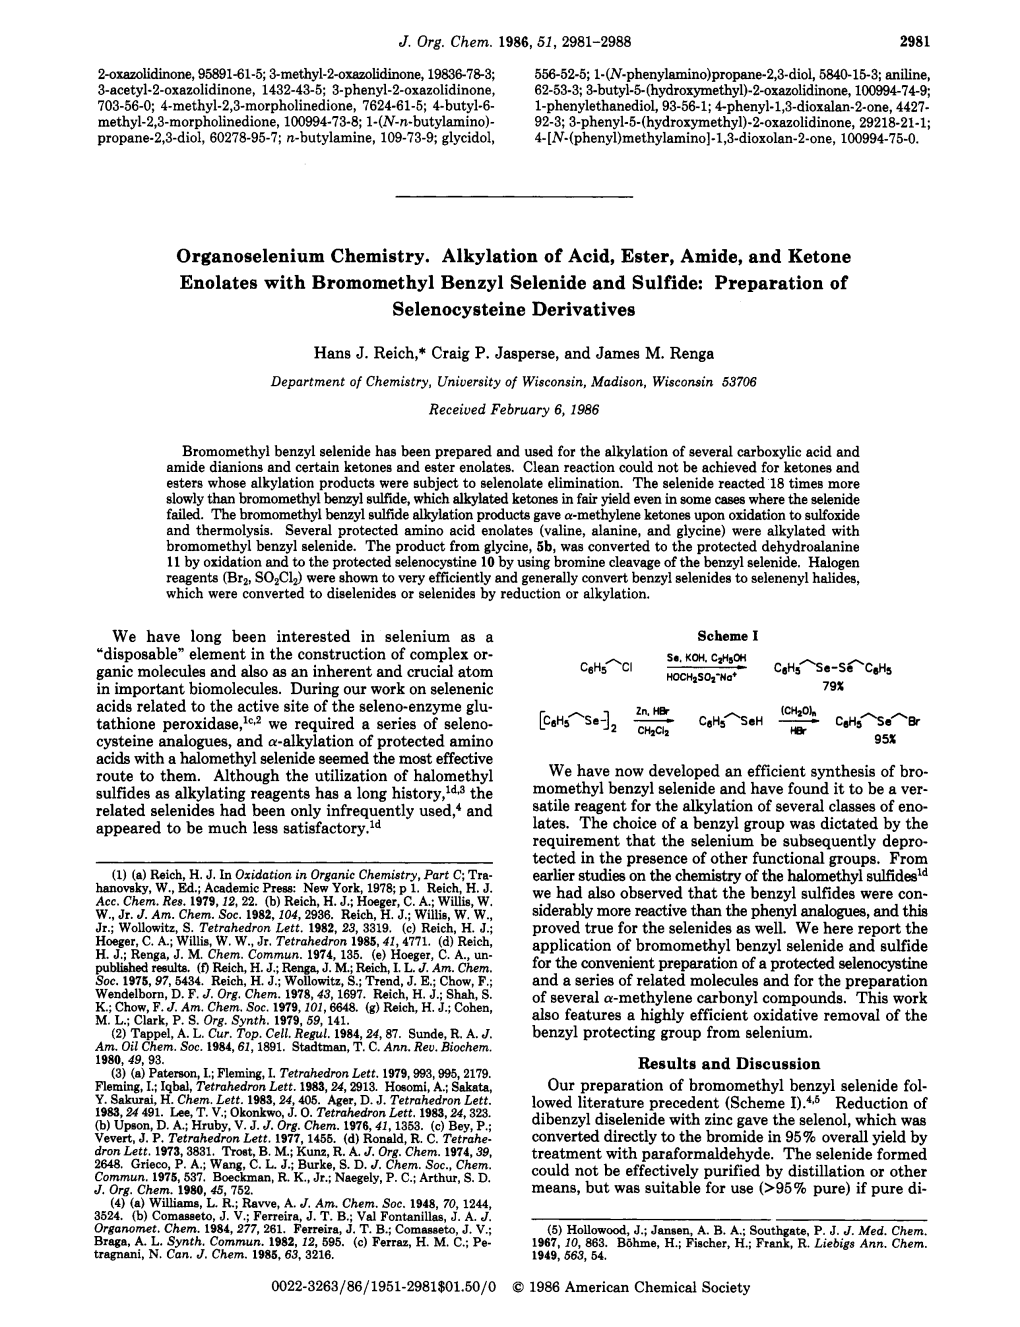 Organoselenium Chemistry. Alkylation of Acid, Ester, Amide, and Ketone